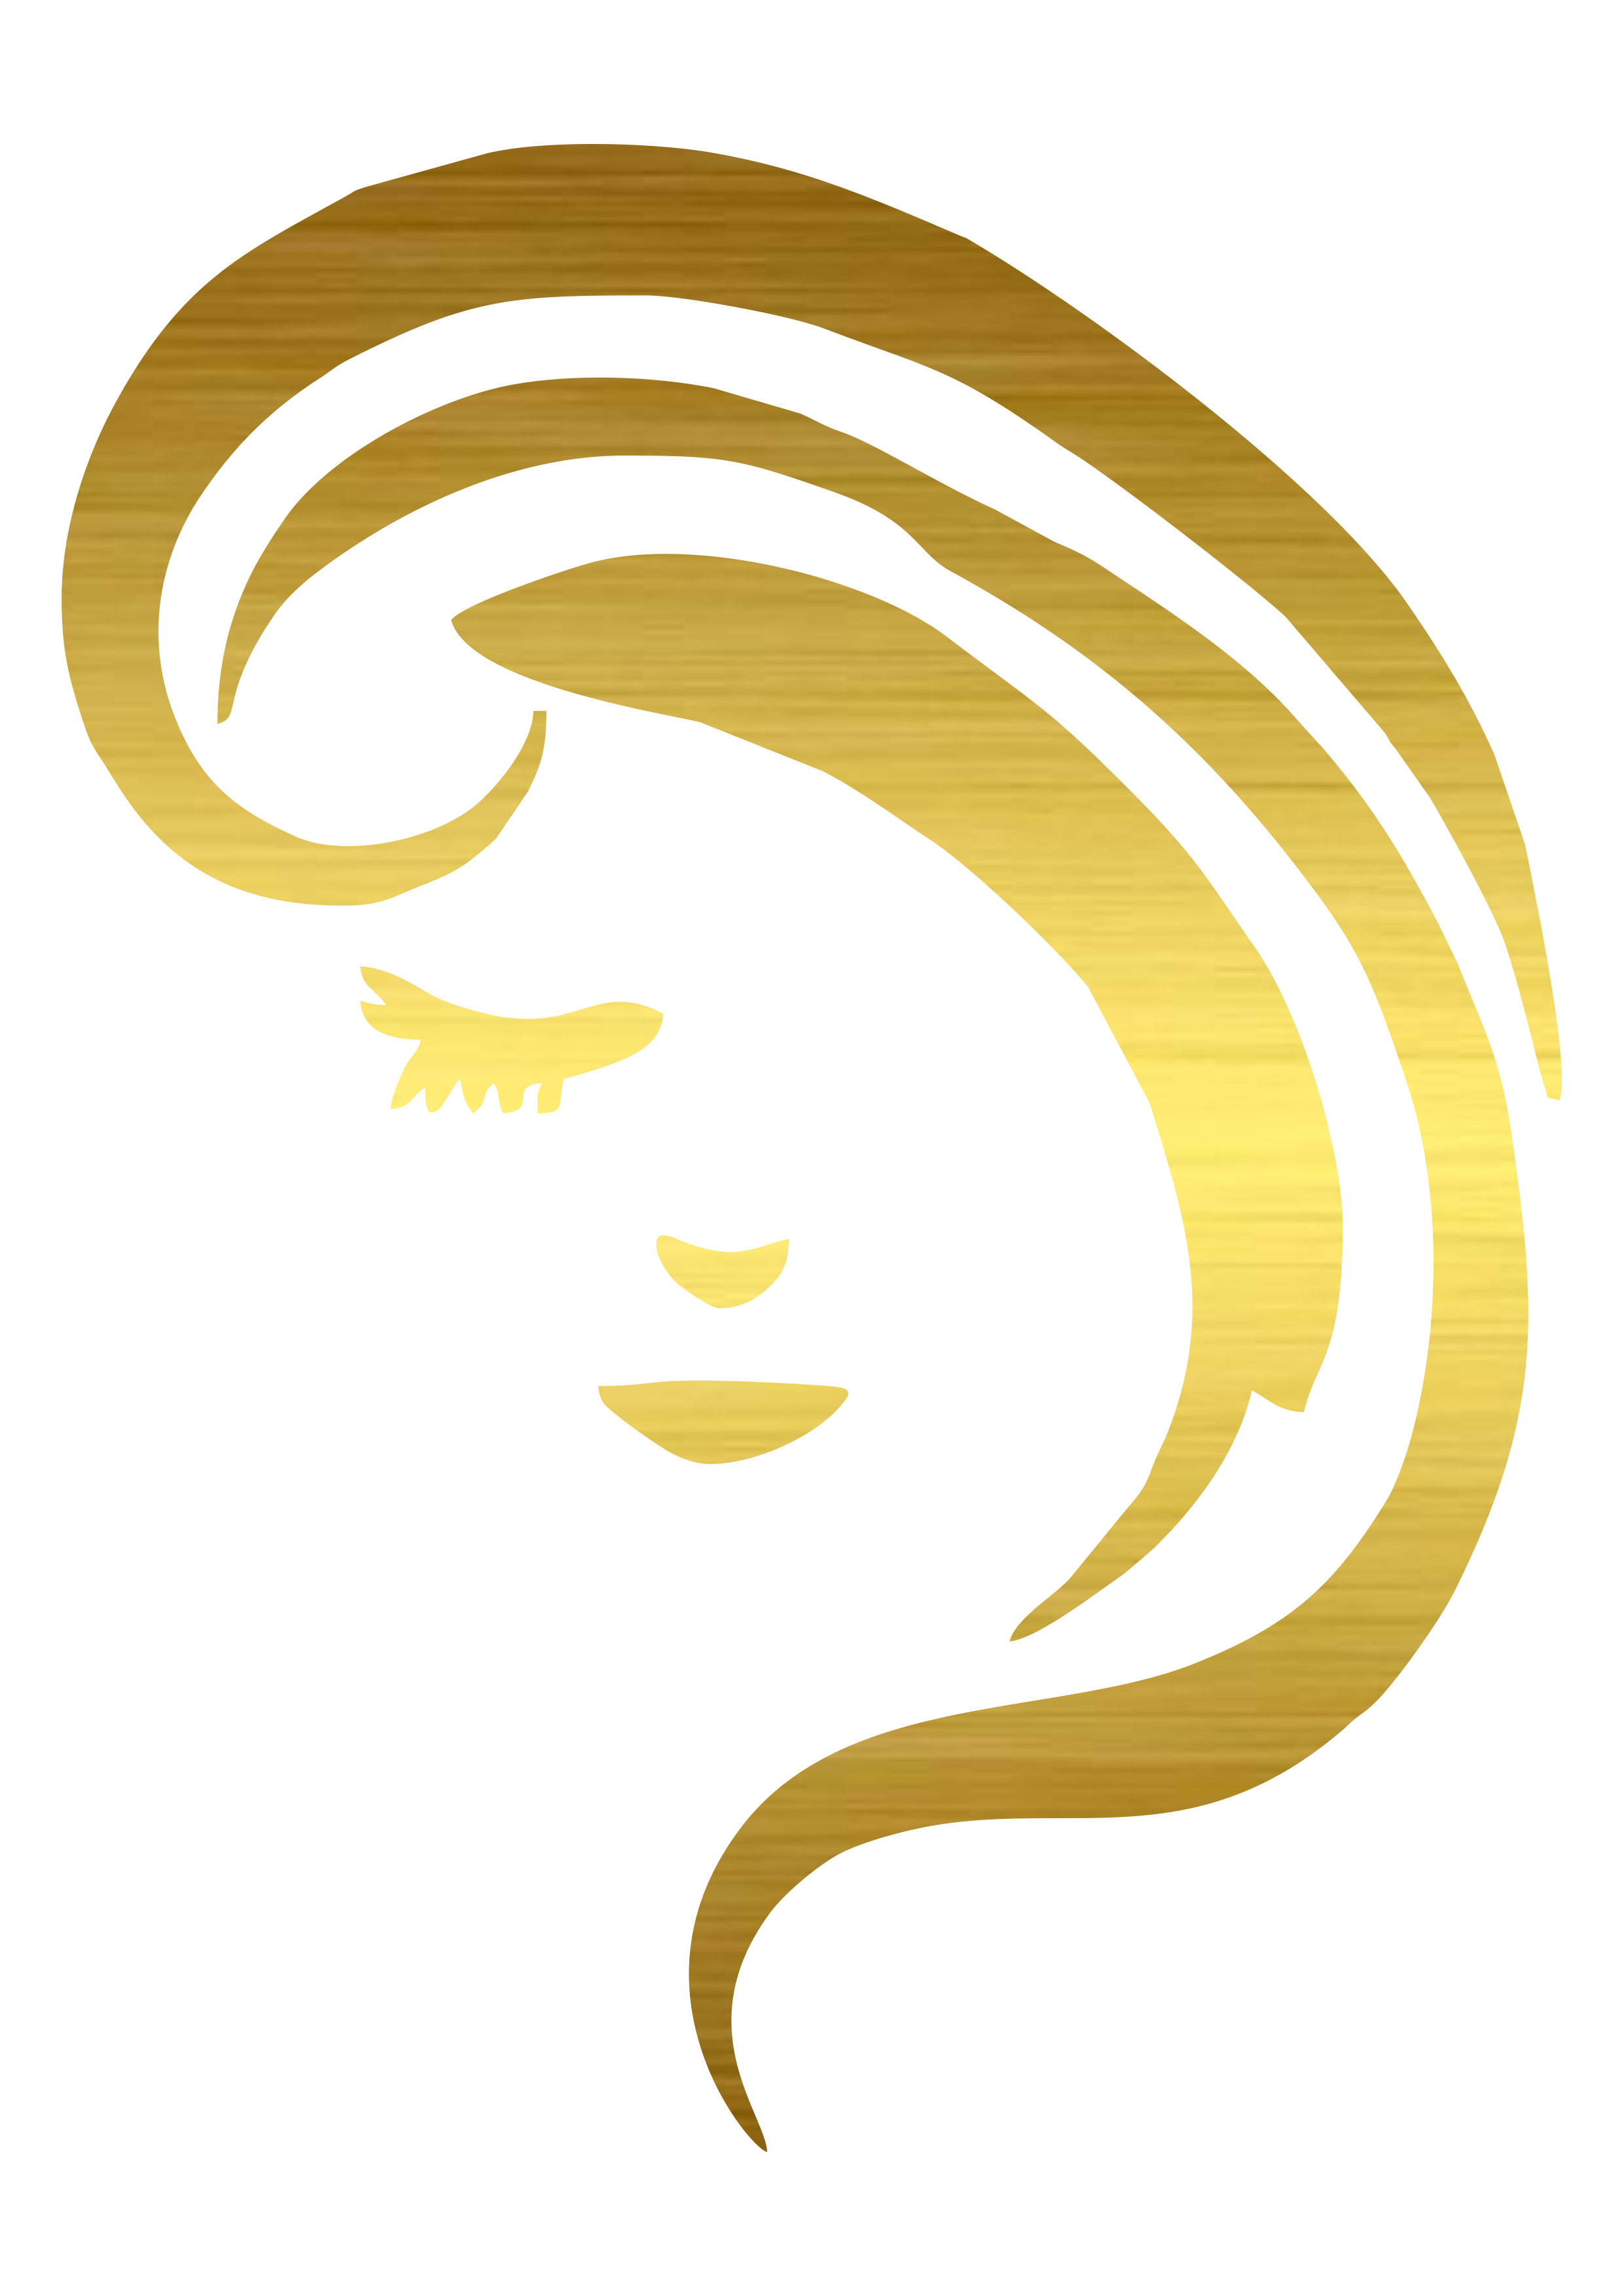 Salão de beleza cabelereira logomarca dourada grátis hair artes gráficas png